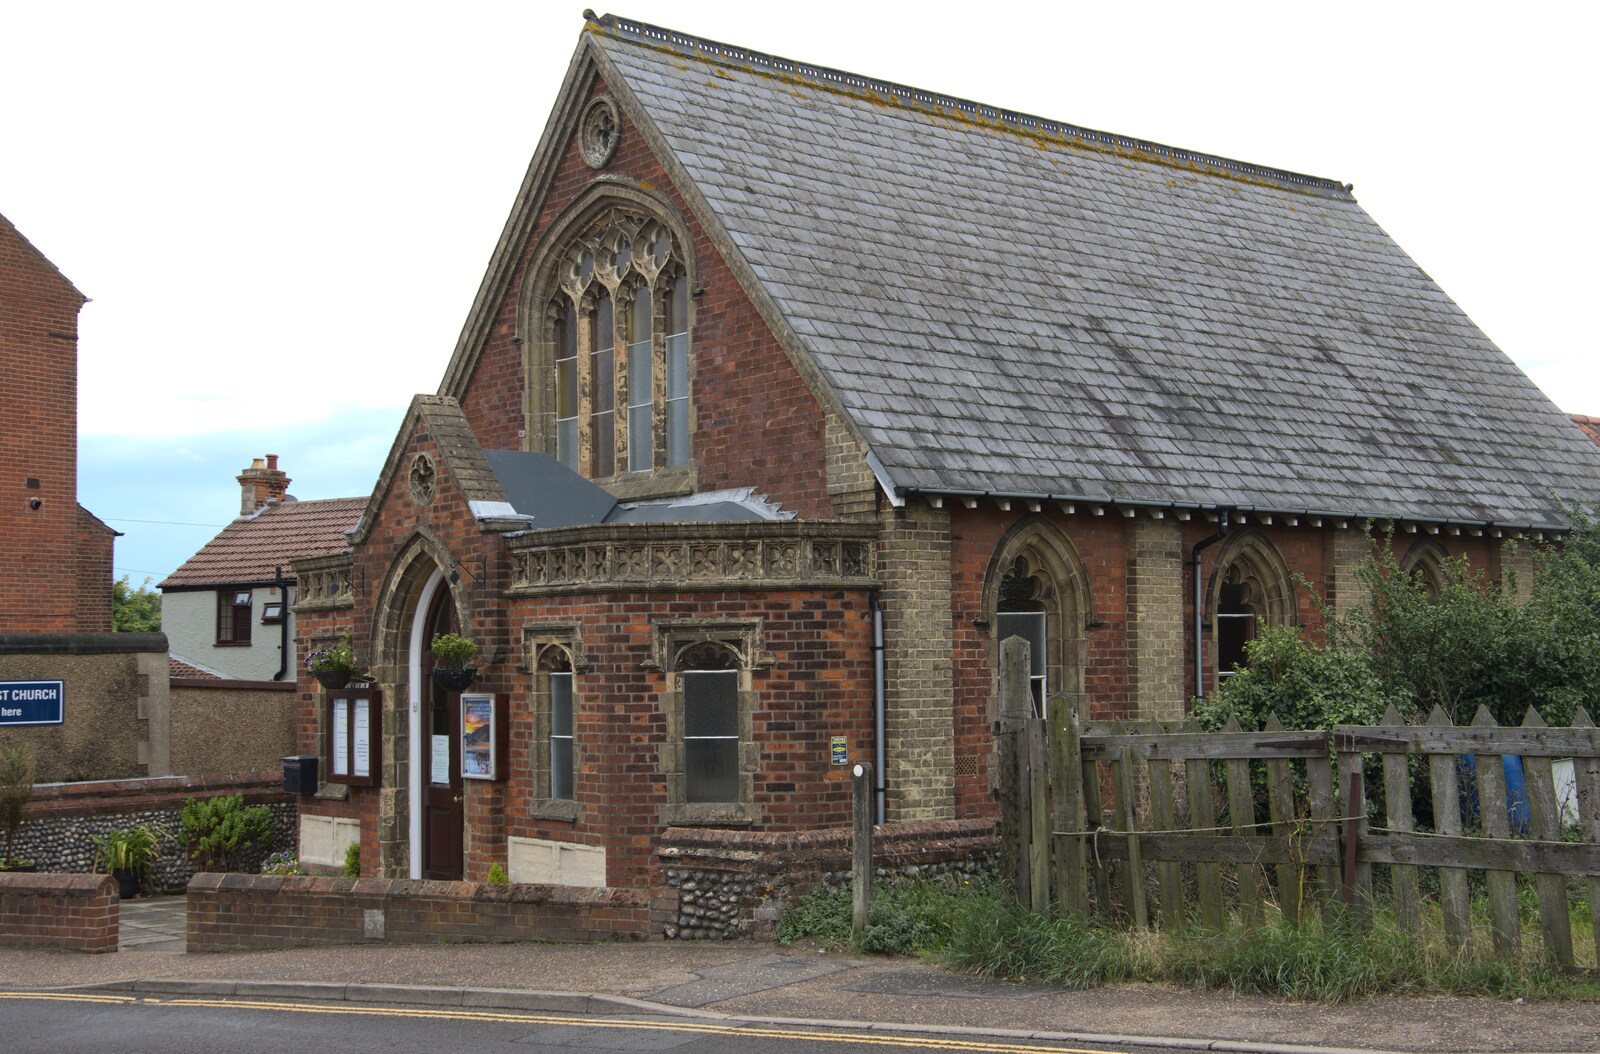 The East Runton Methodist chapel from Camping on the Coast, East Runton, North Norfolk - 25th July 2020